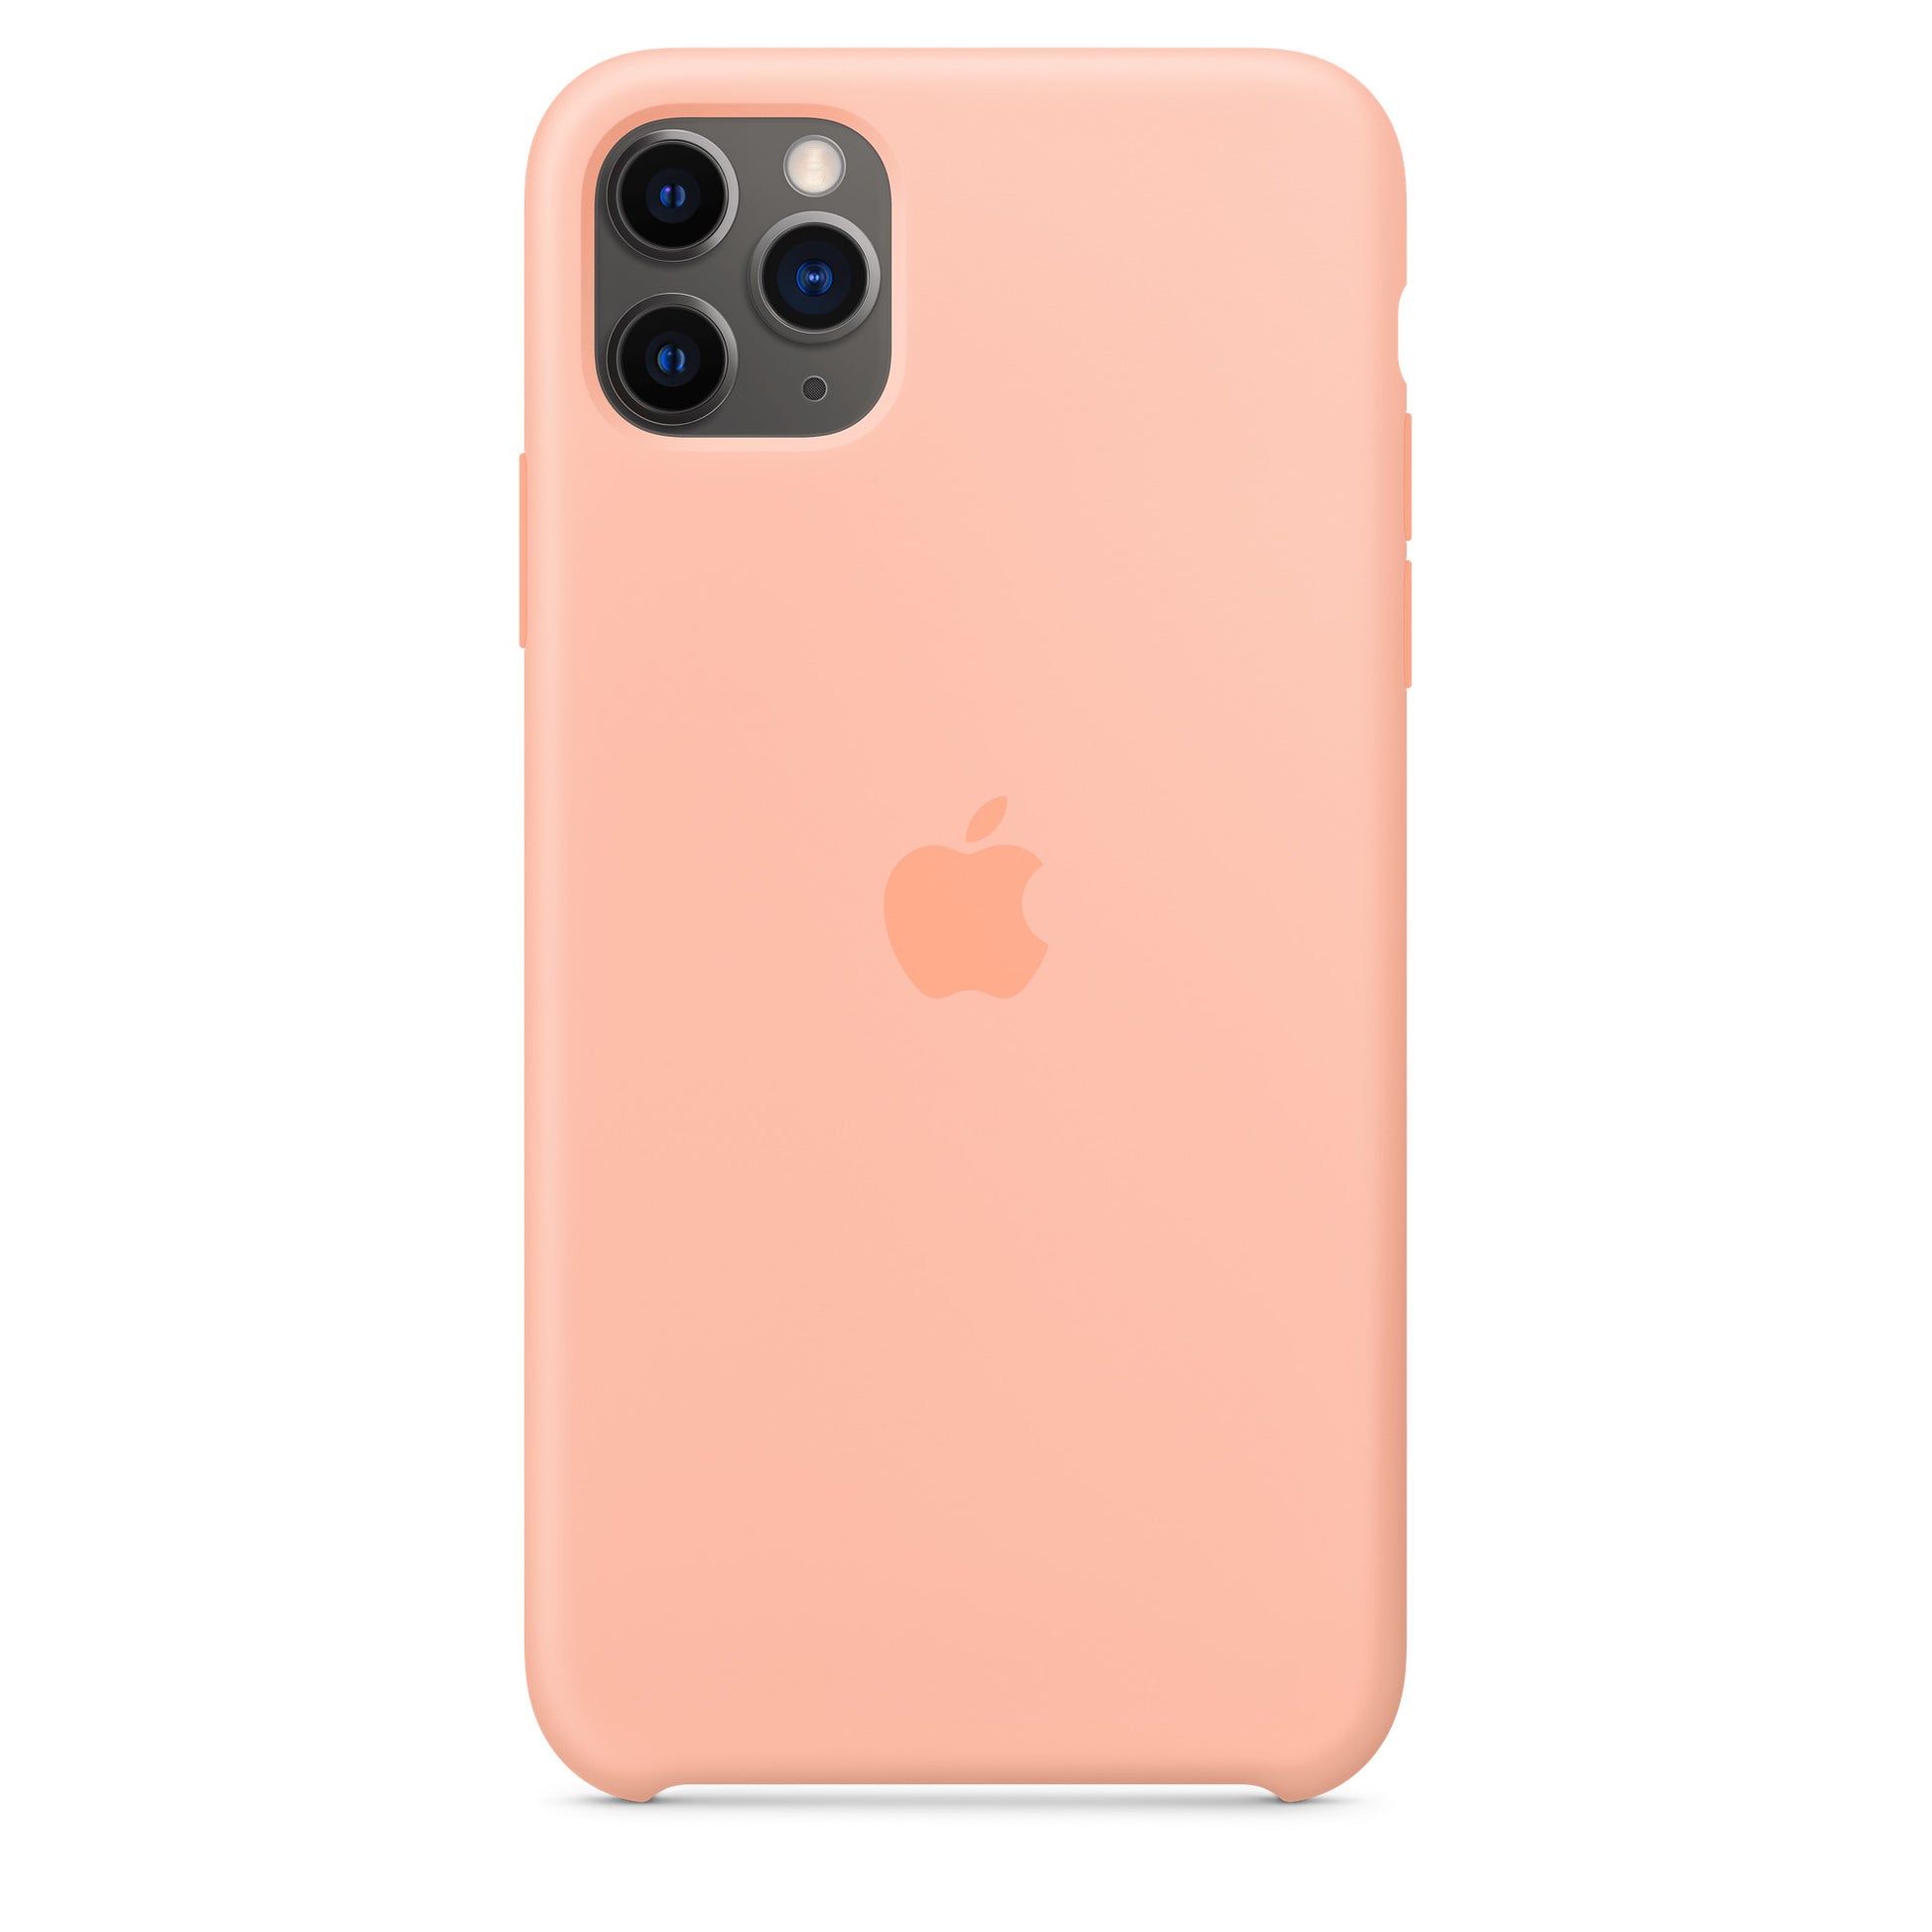 Apple iPhone 11 Pro Max 64GB Space Grau Gut Ohne Vertrag mit Apple iPhone 11 Pro Max Silikonhülle – Grapefruit